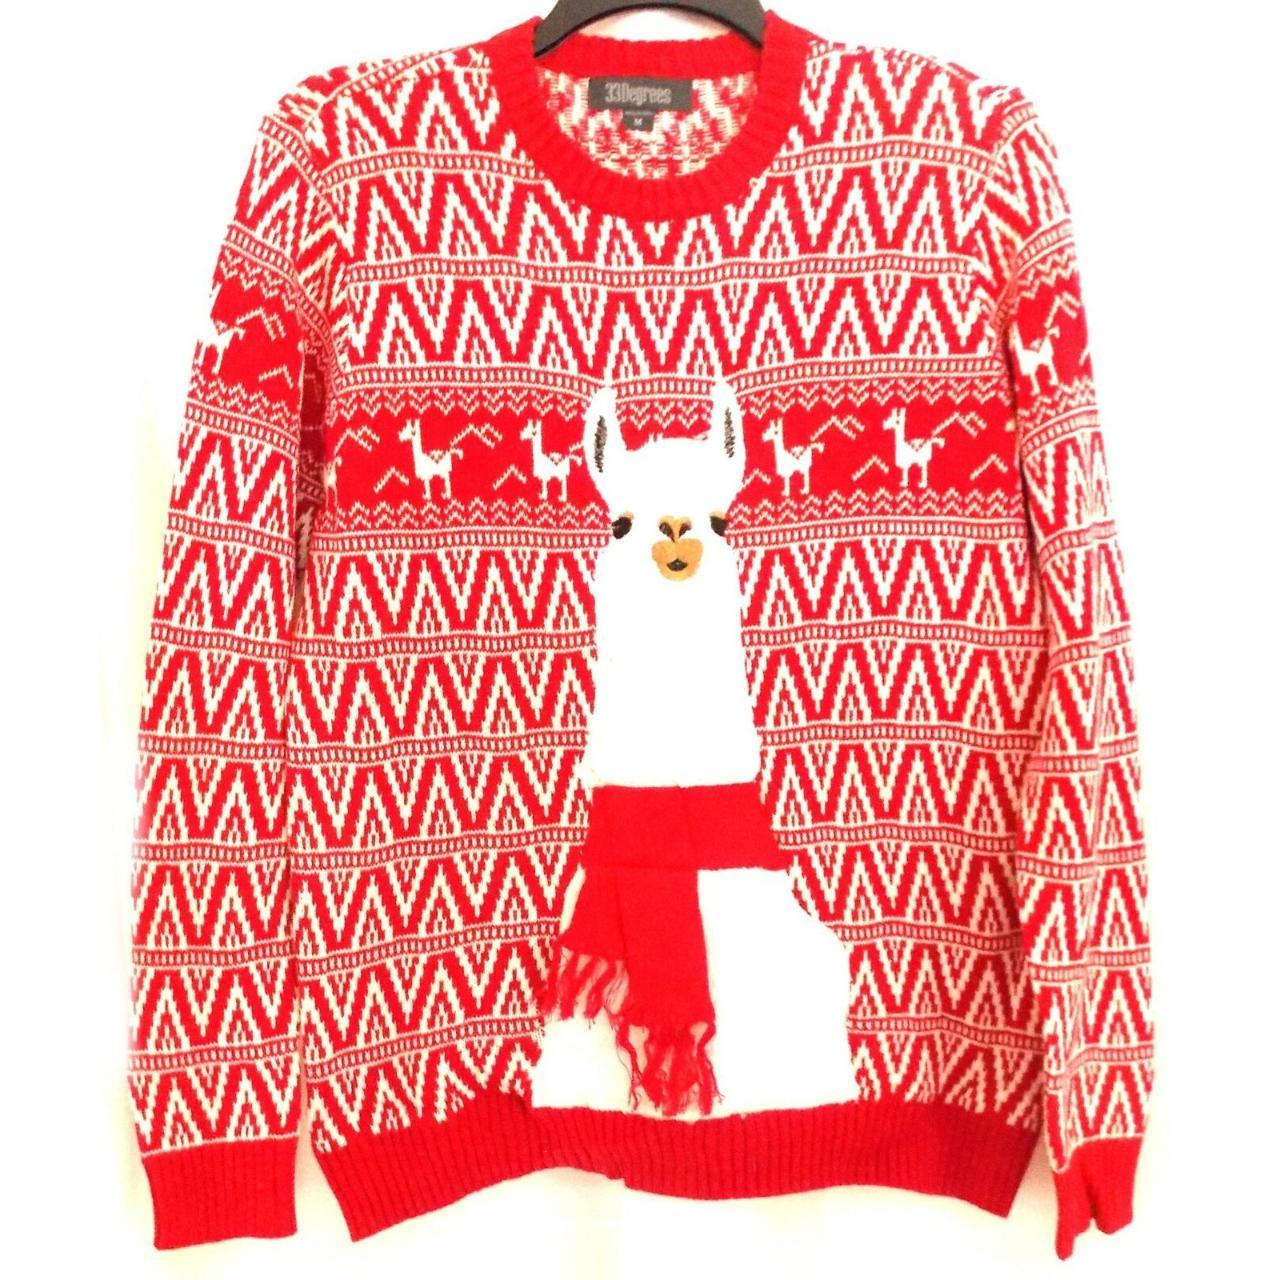 Men's Llama Ugly Christmas Sweater